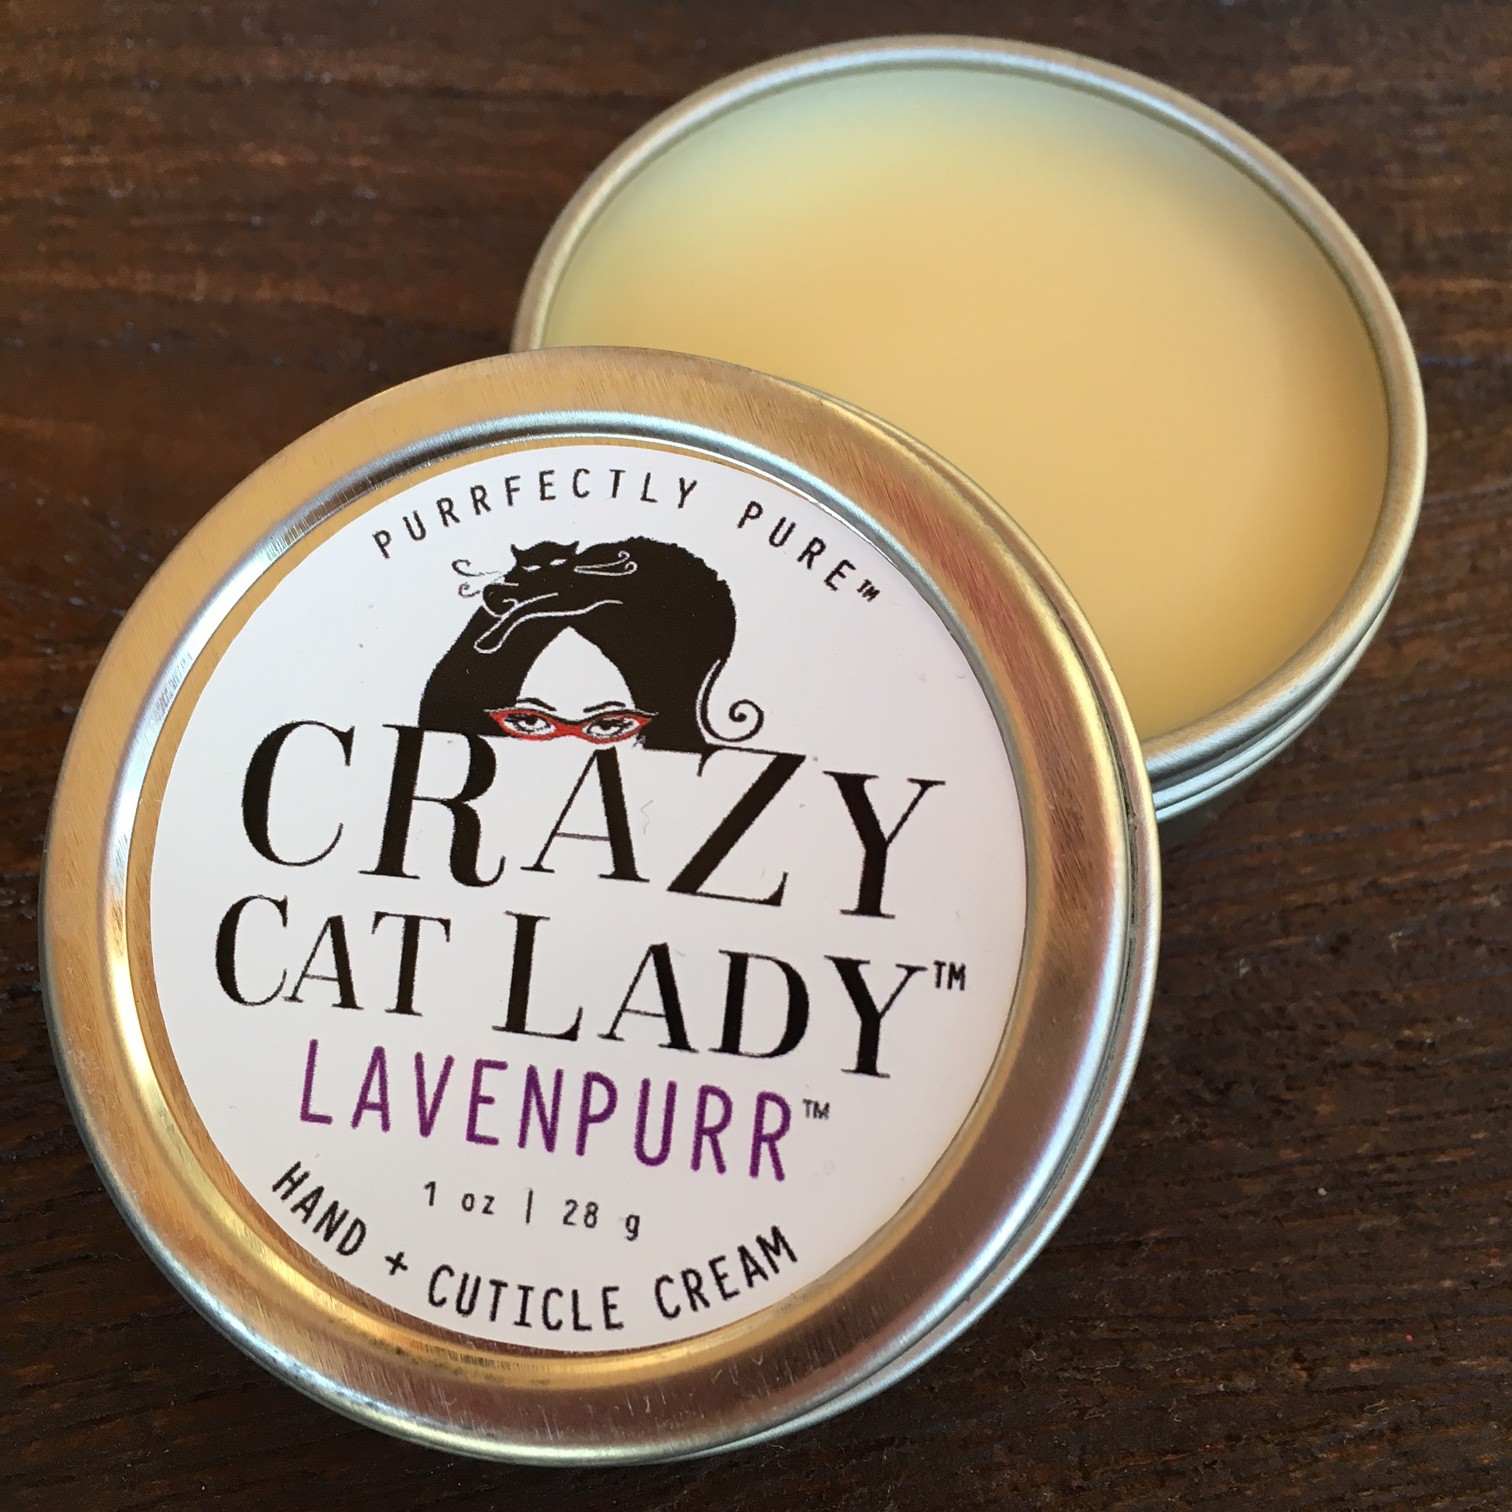 Lavenpurr Crazy Cat Lady Lavenpurr Organic Hand & Cuticle Cream